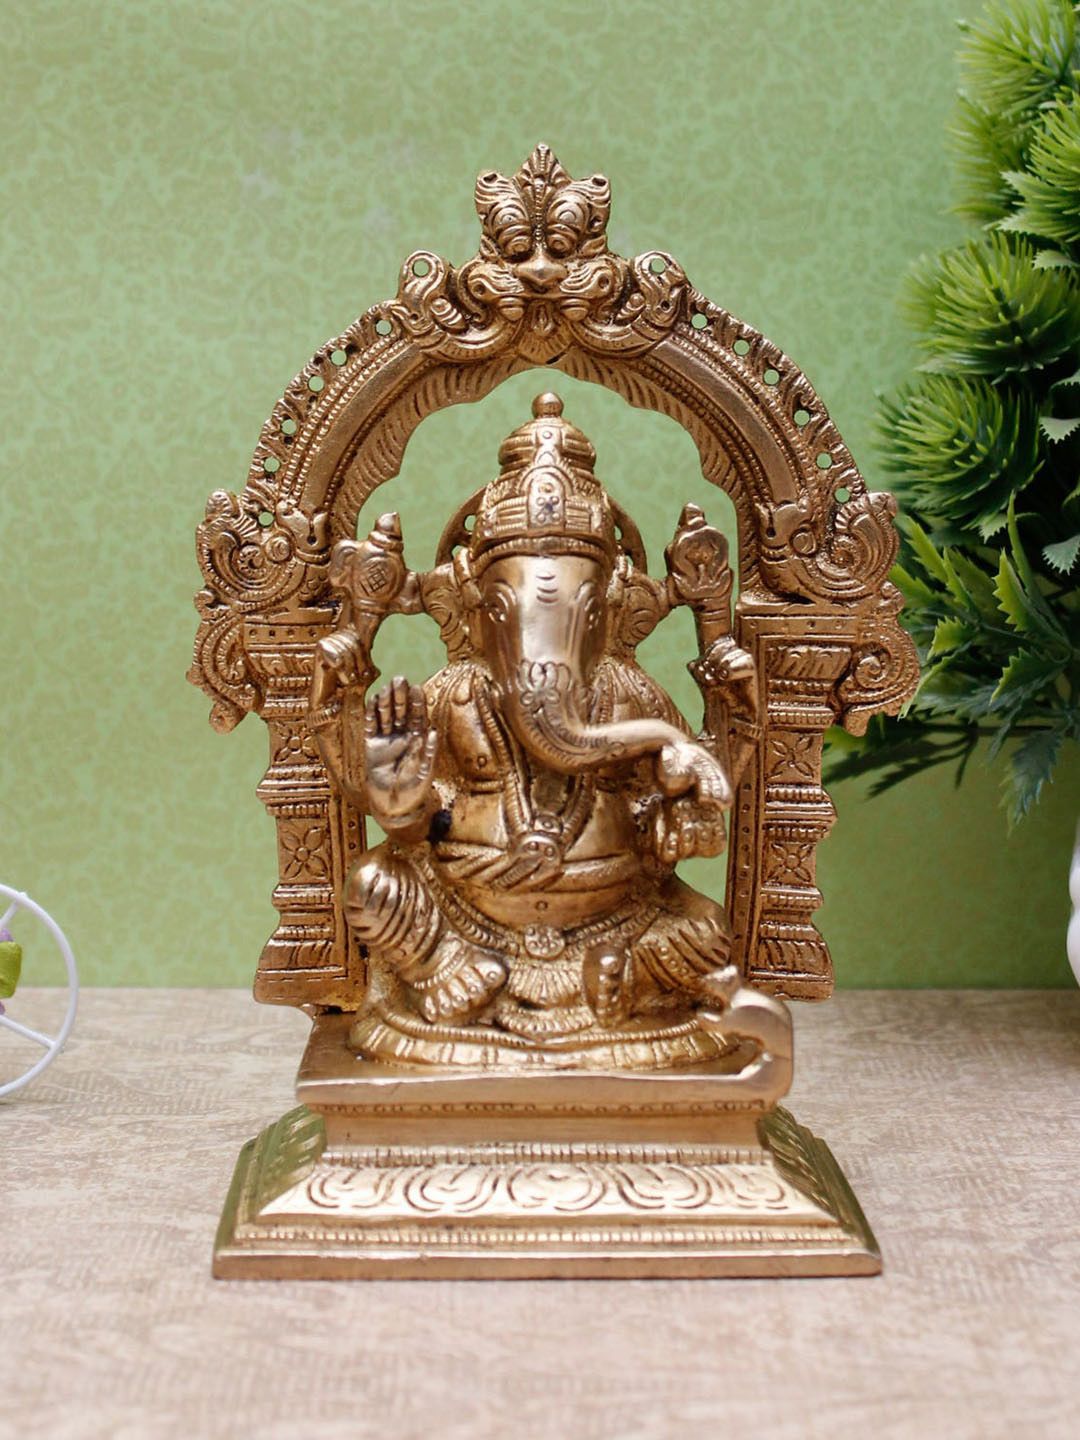 StatueStudio Gold-Toned Ganesha Idol Showpiece Price in India